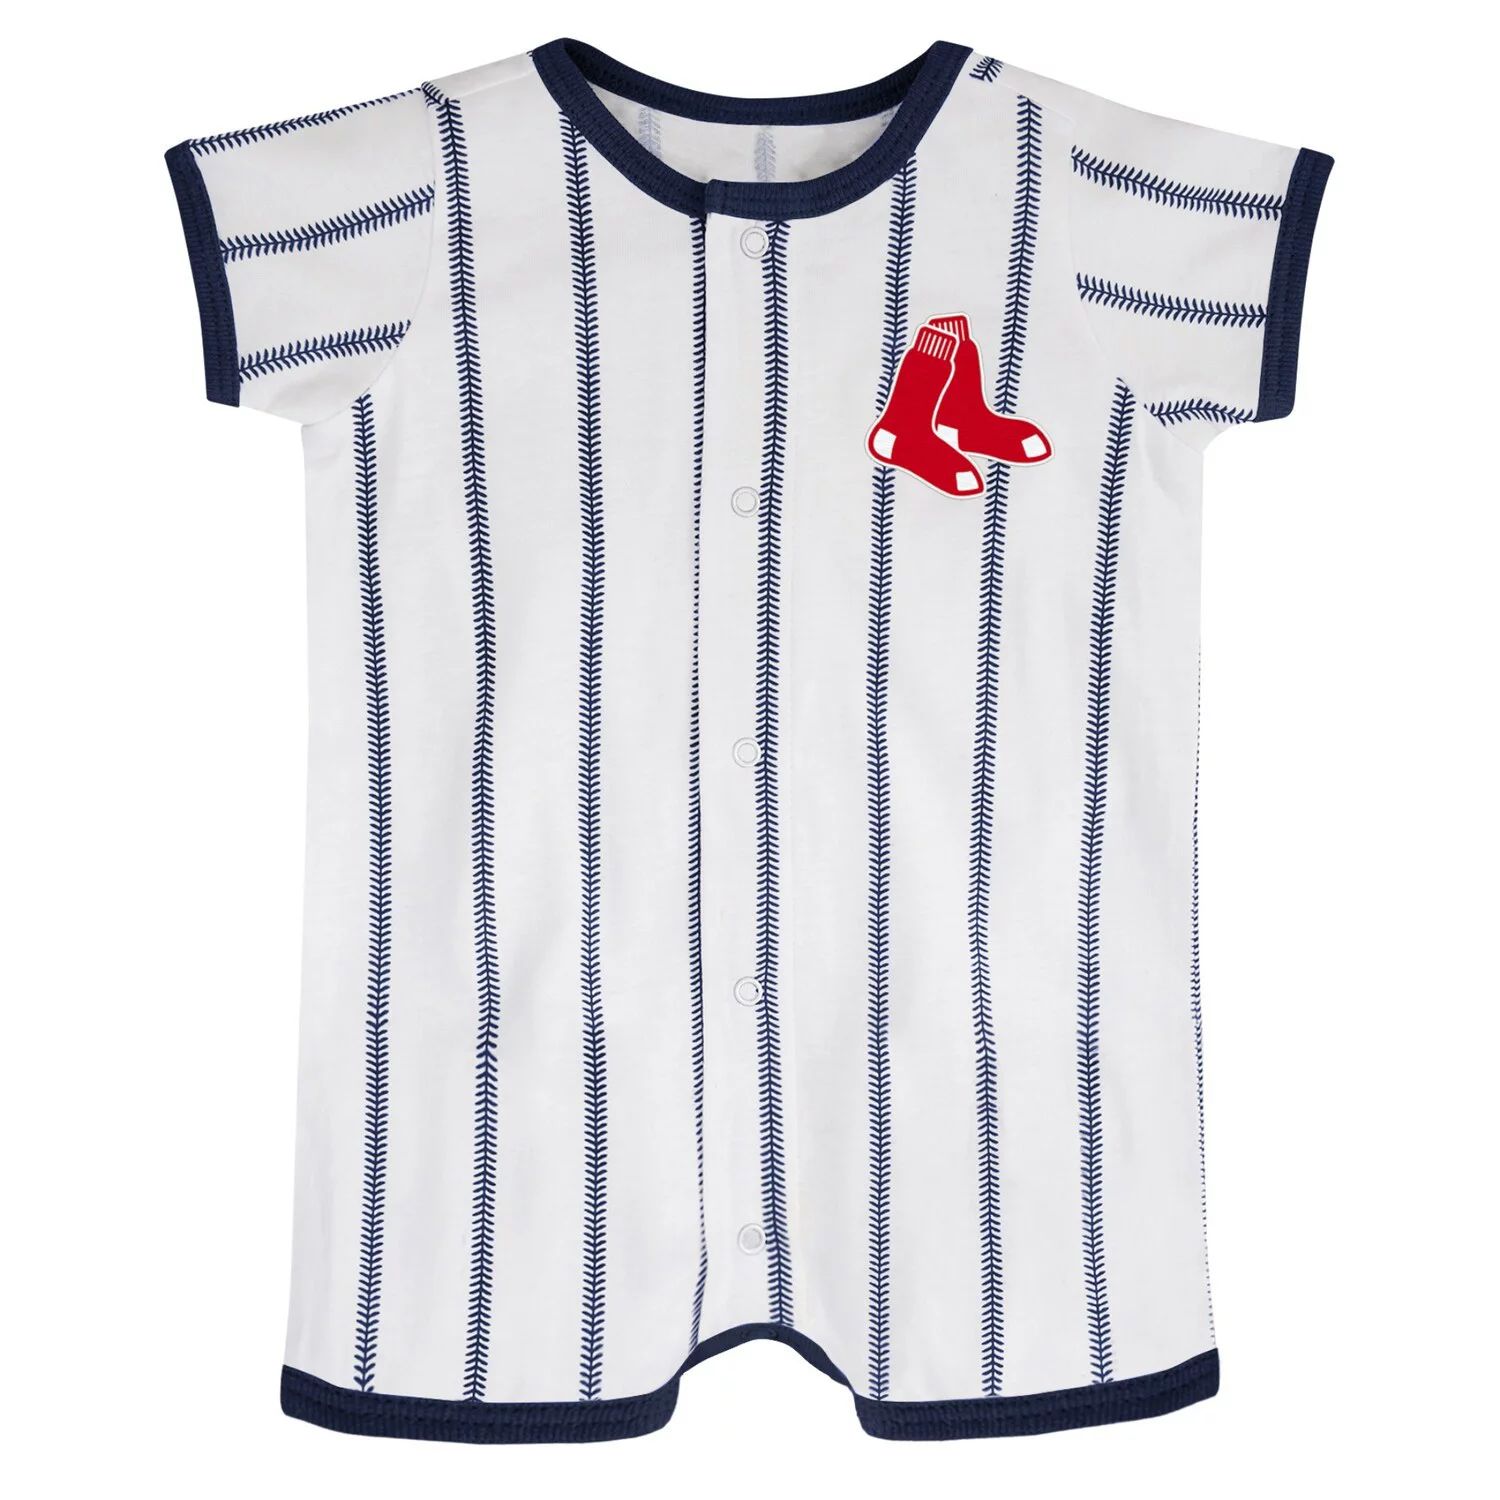 Белый/темно-синий джемпер для новорожденных Boston Red Sox Power Hitter с короткими рукавами Outerstuff белый темно синий джемпер с короткими рукавами для новорожденных detroit tigers power hitter outerstuff